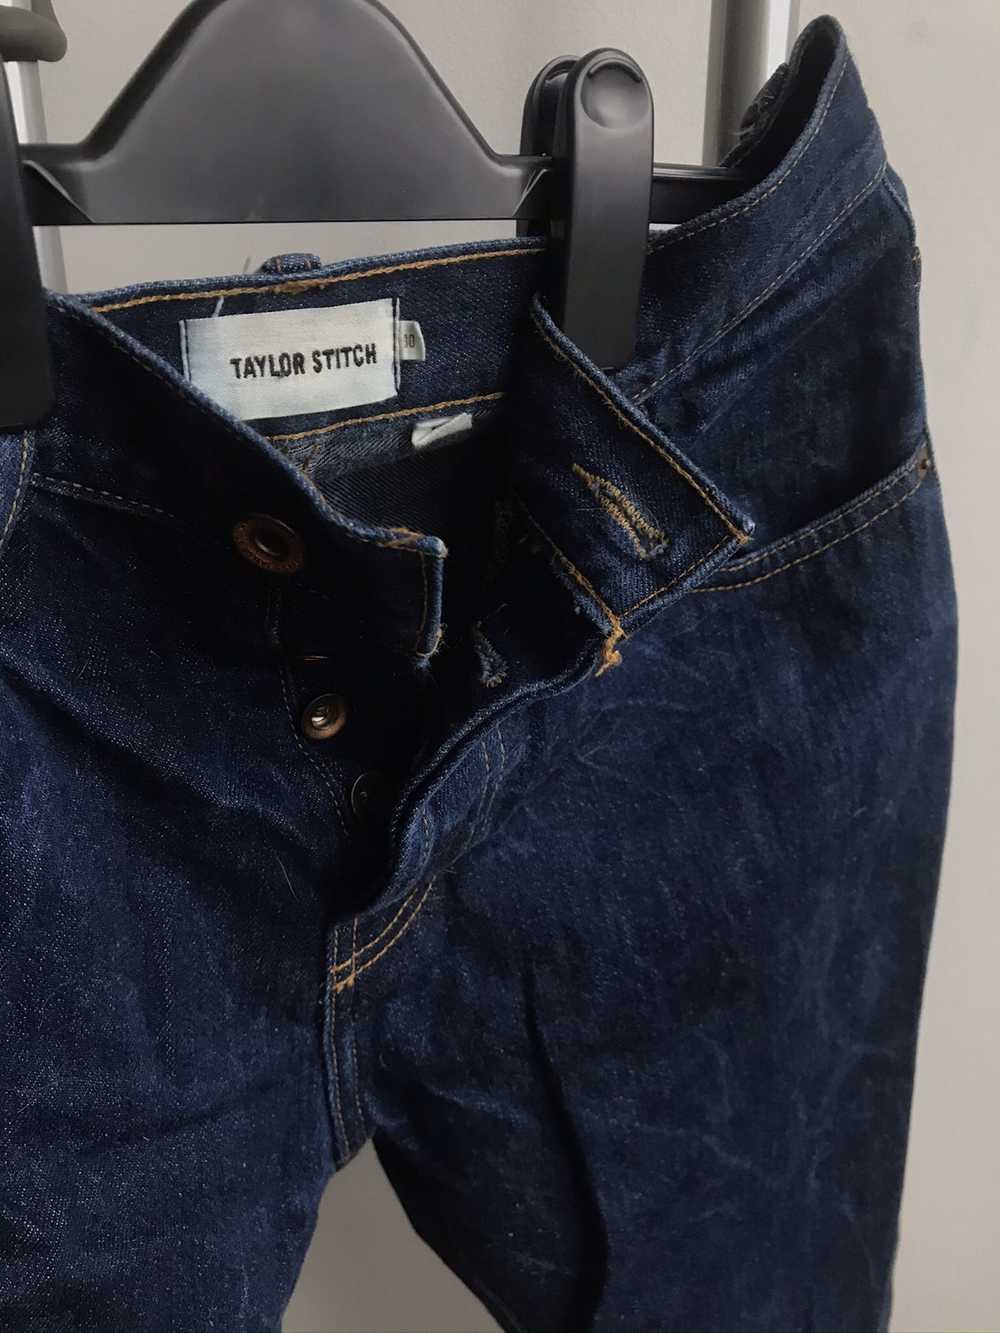 Taylor Stitch Selvedge Denim Jeans 30x32 - image 5